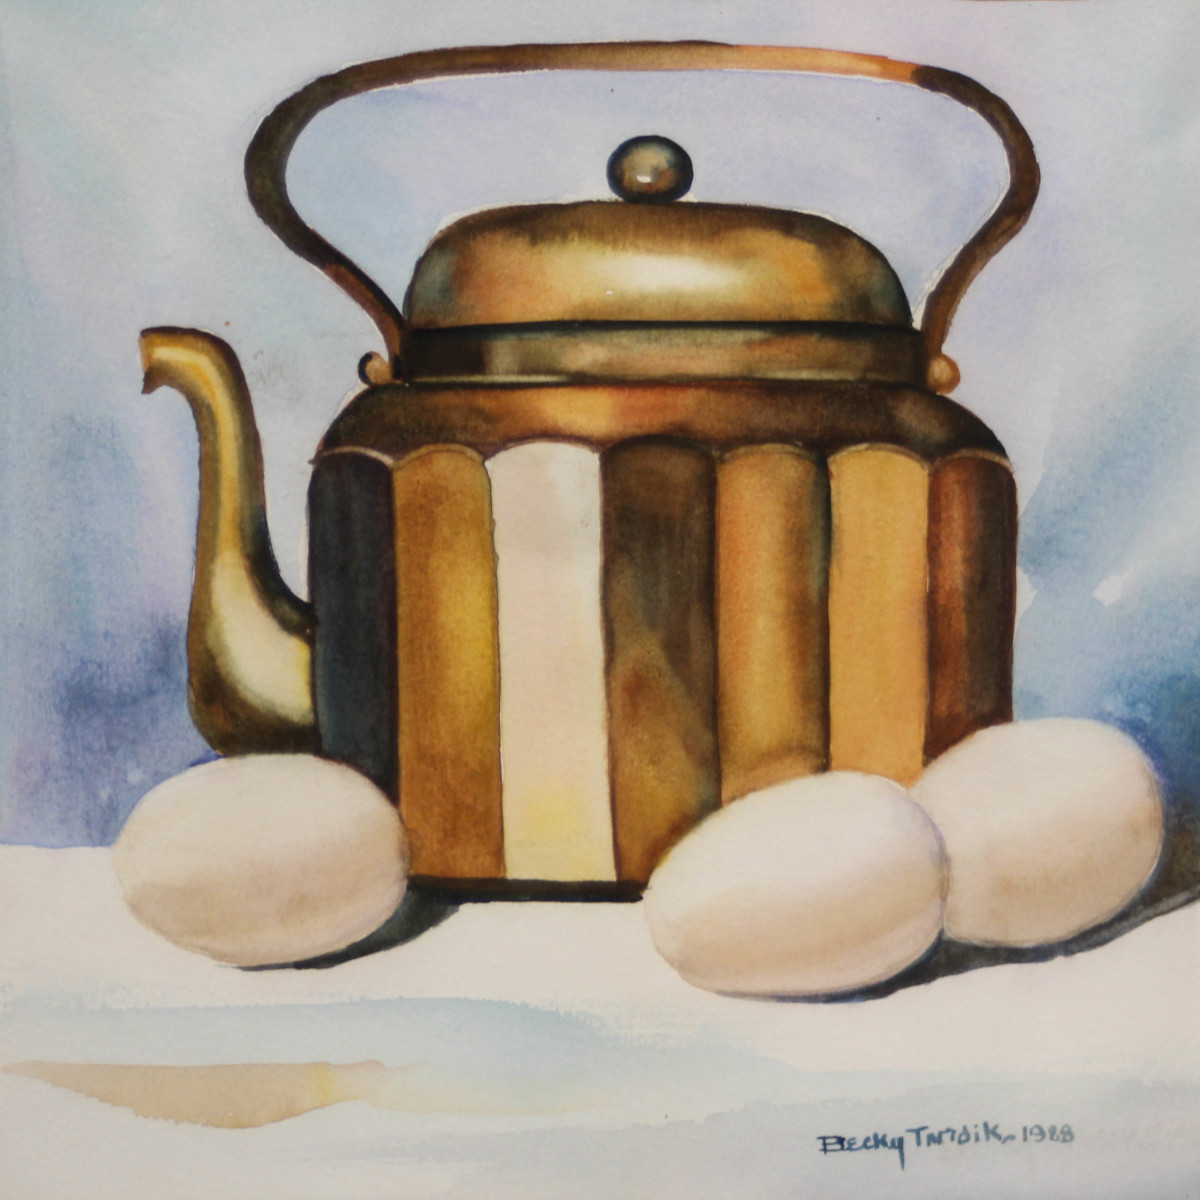 Tea Kettle & Eggs by Becky Tardick 